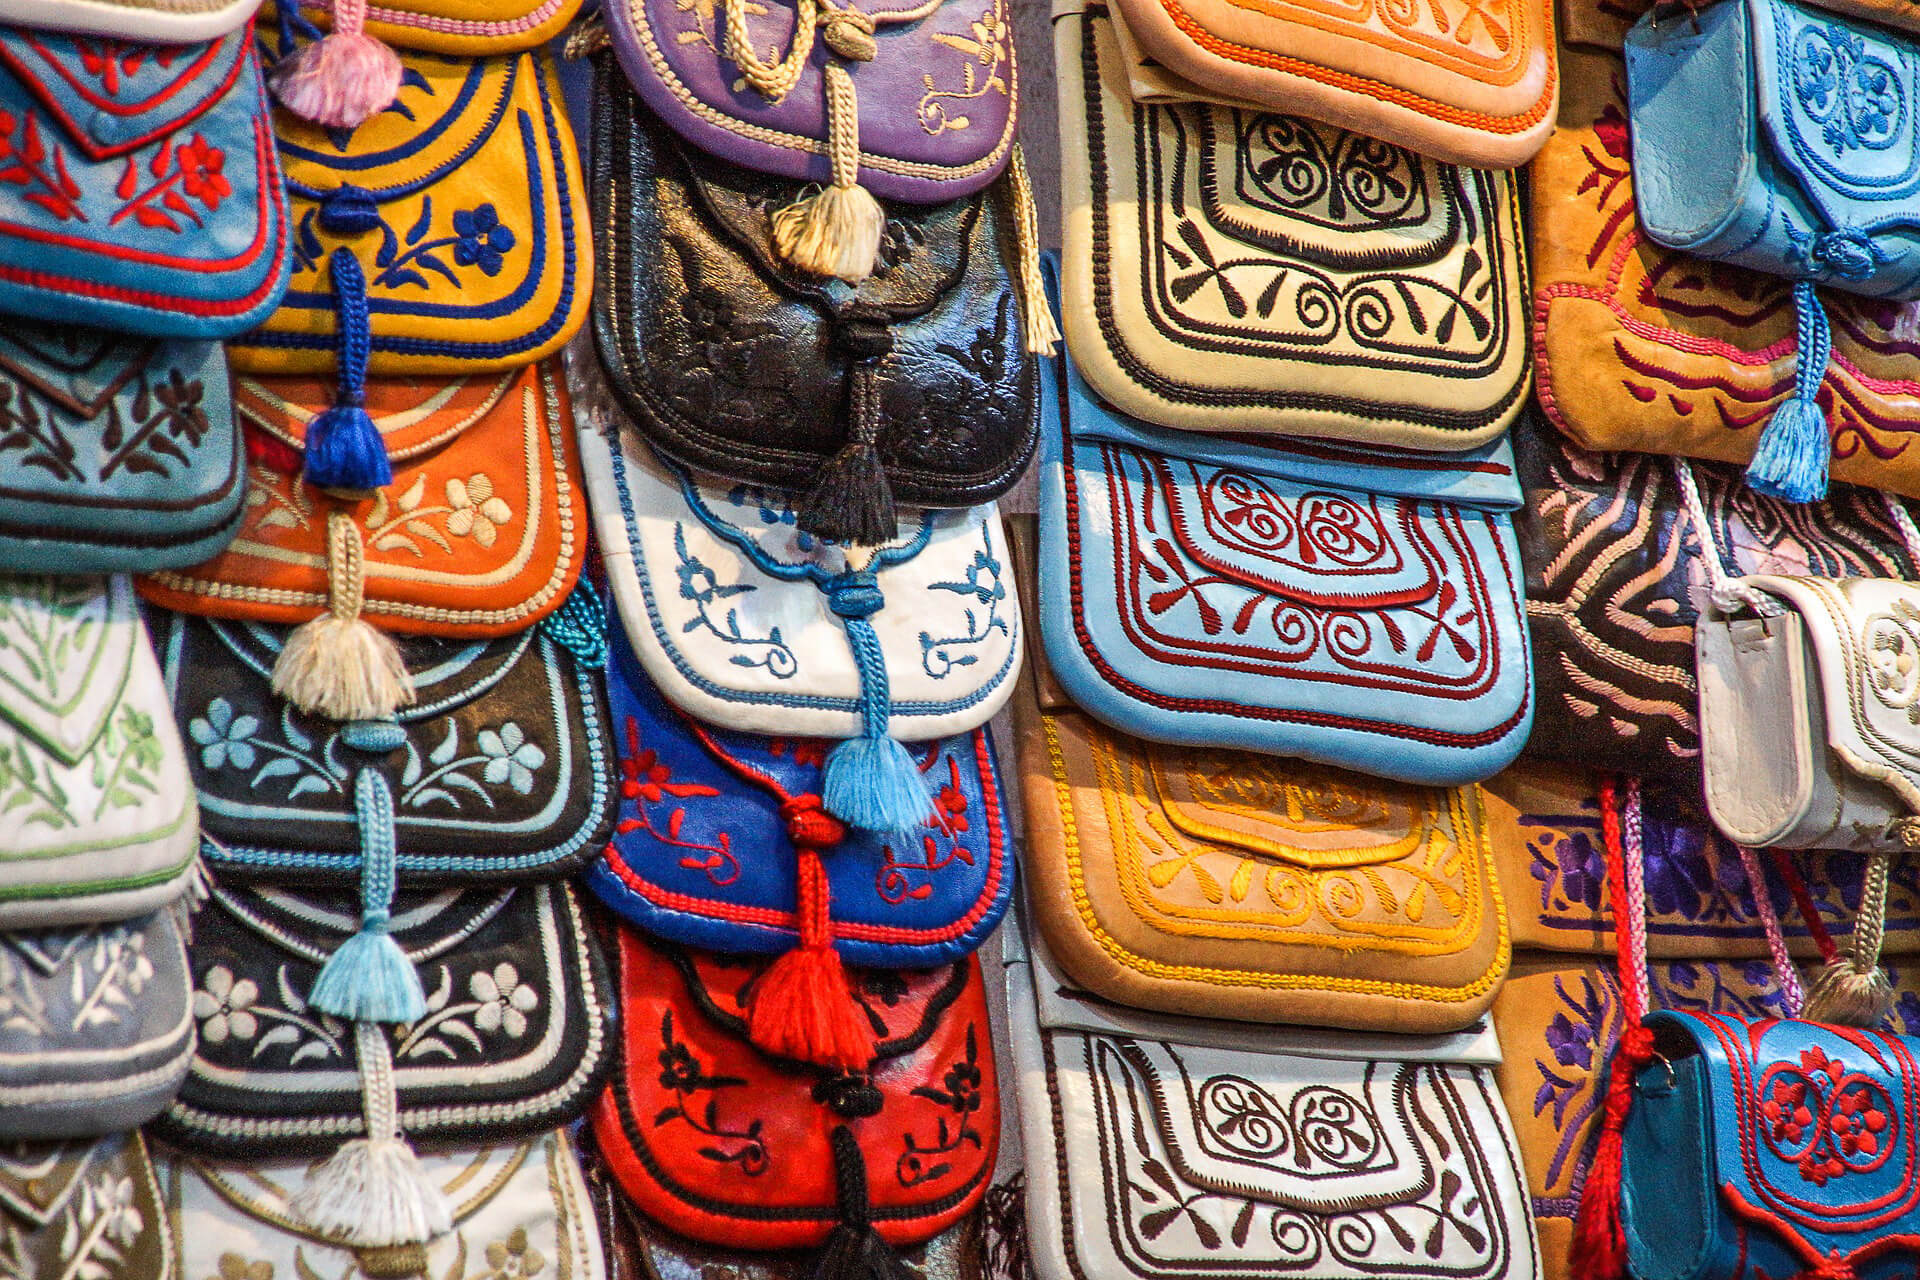 Sahara Desert Tour - Shopping in Marrakech